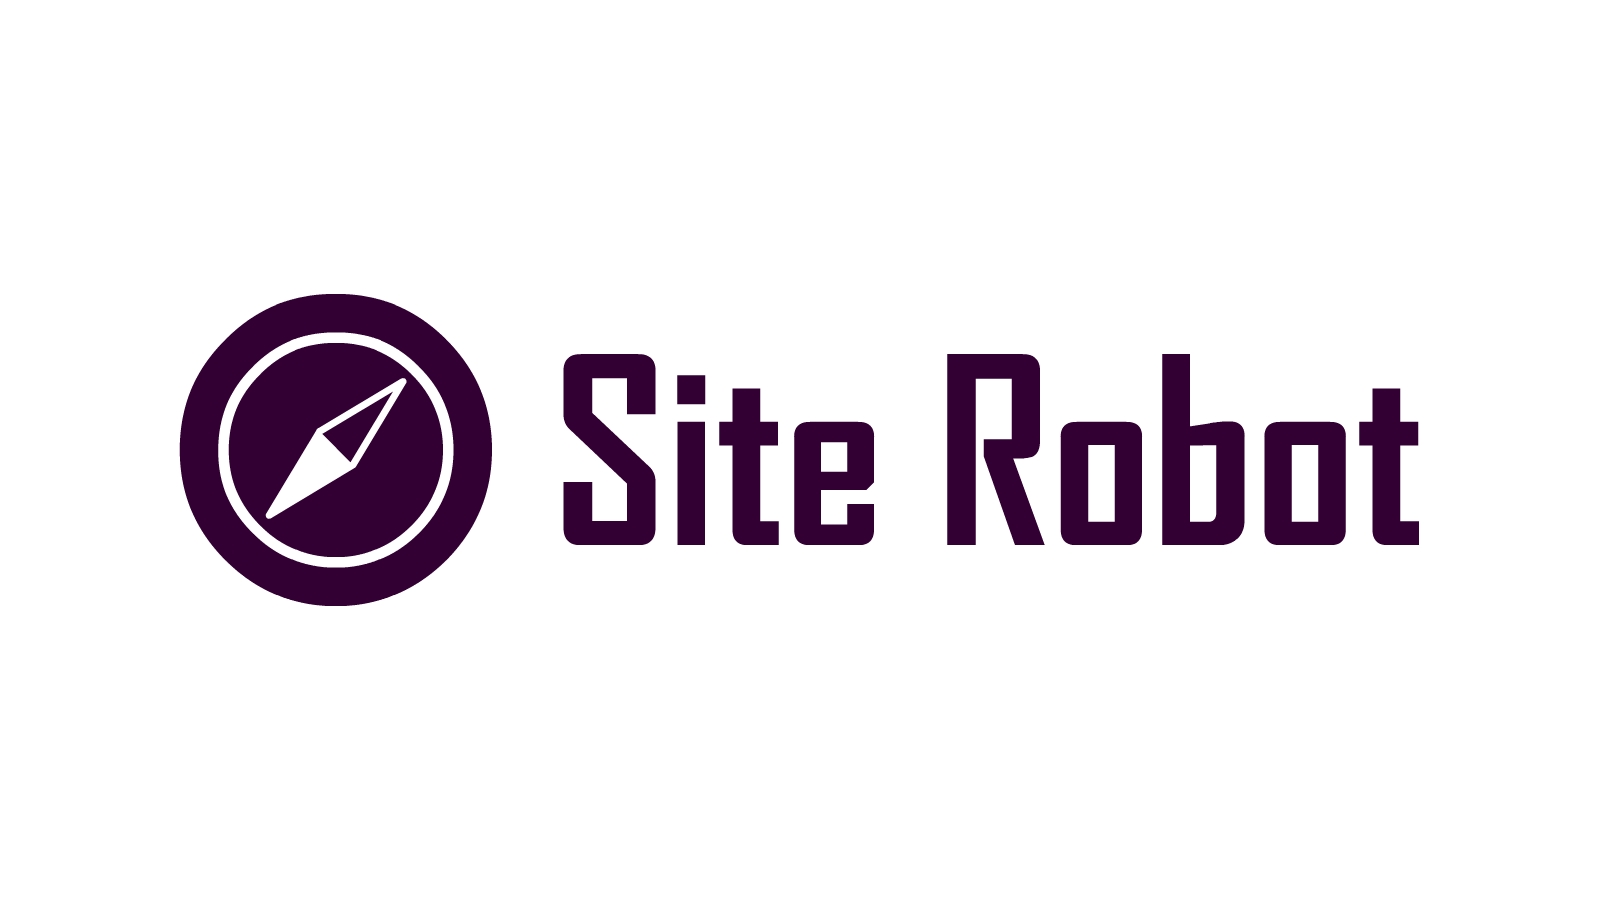 Site Robot